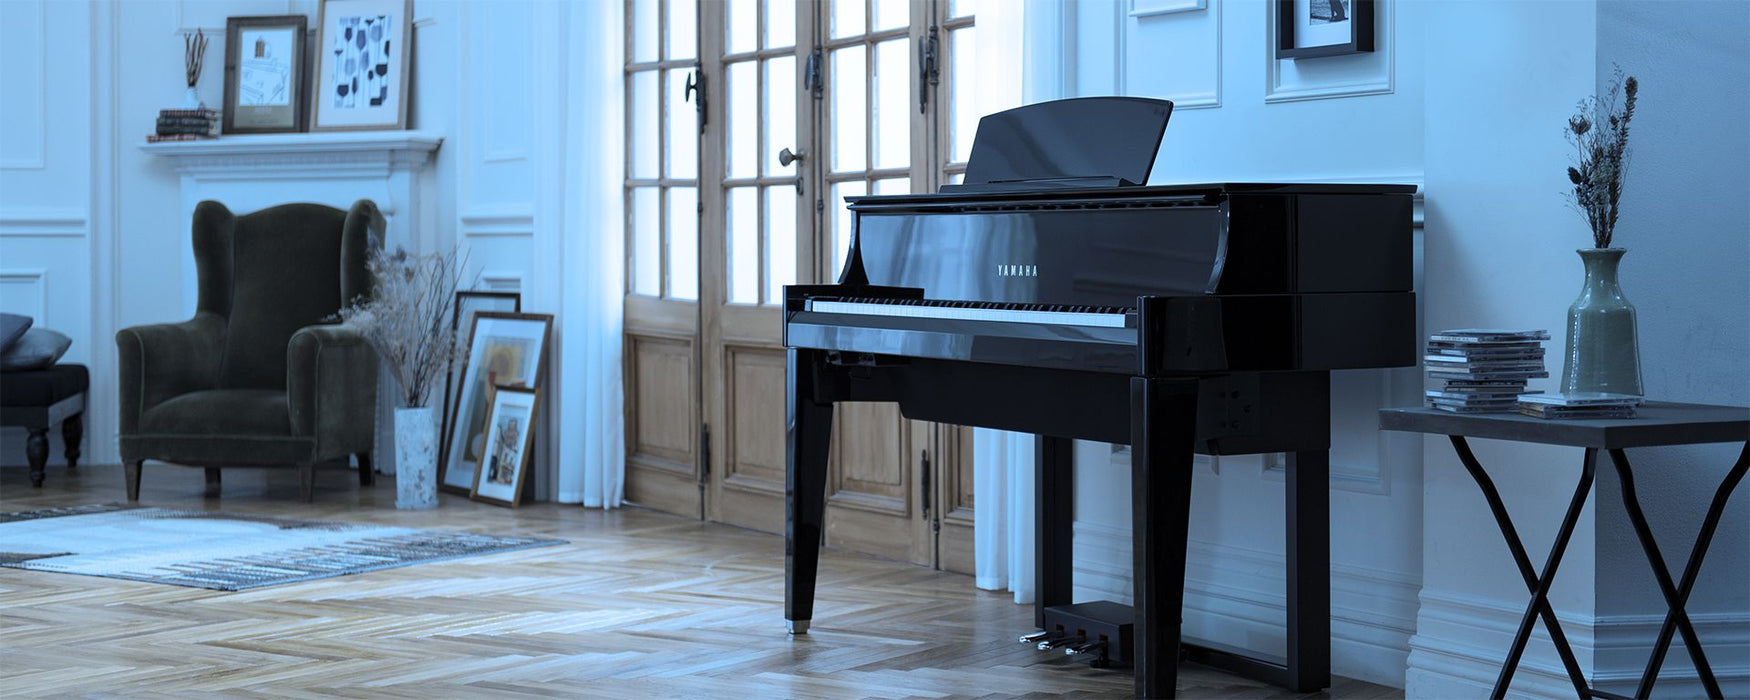 Yamaha N1X AvantGrand Hybrid Digital Piano - Fair Deal Music